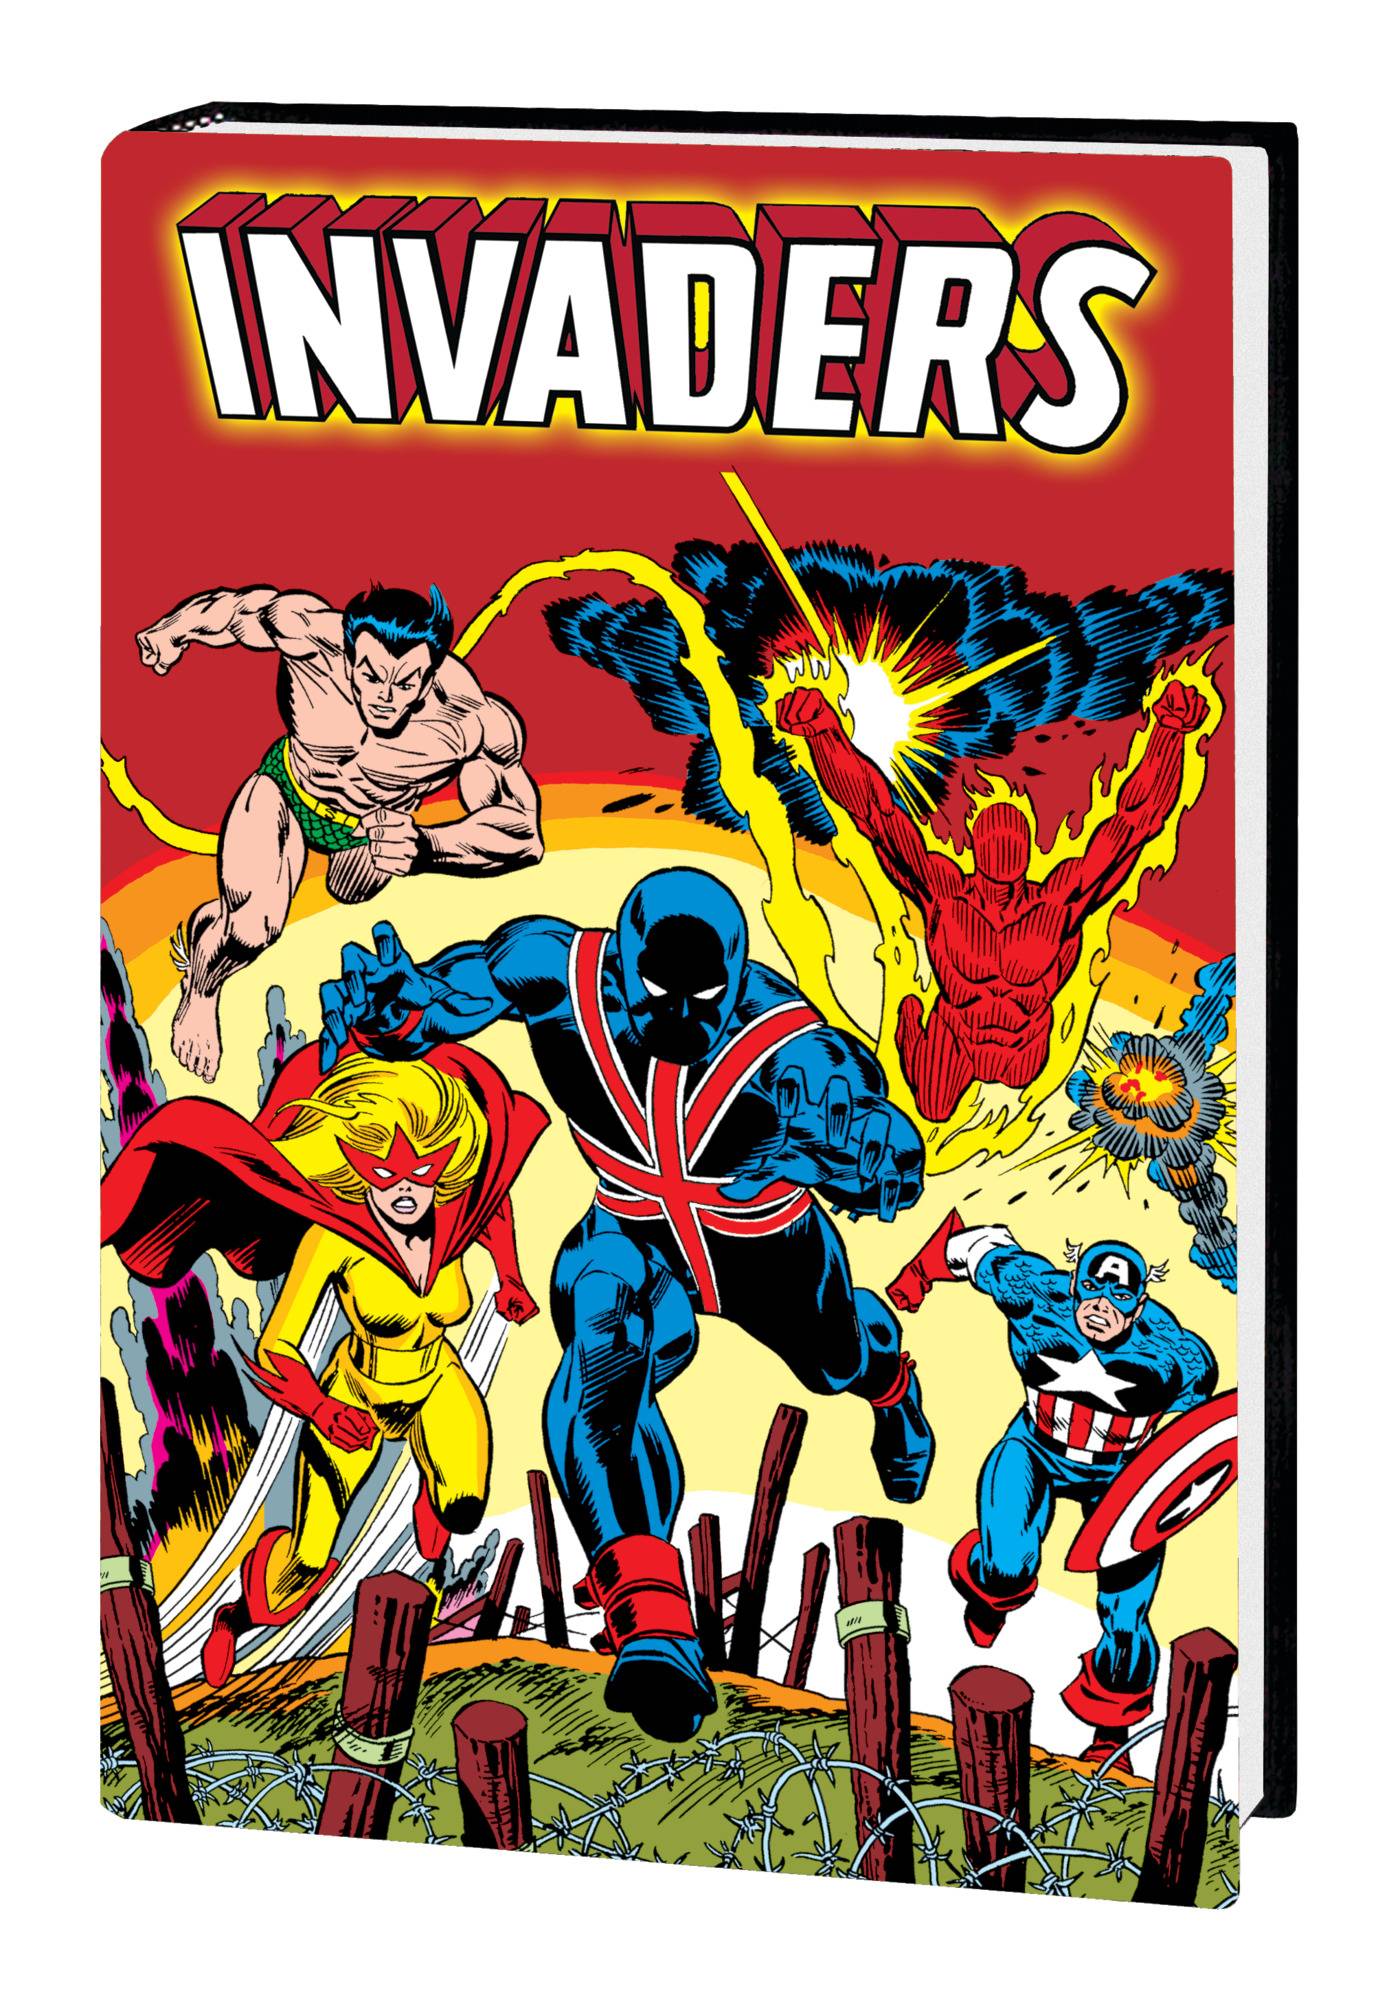 Invaders #7 (NM-) 1st Baron Blood and Union Jack Marvel Comics c187